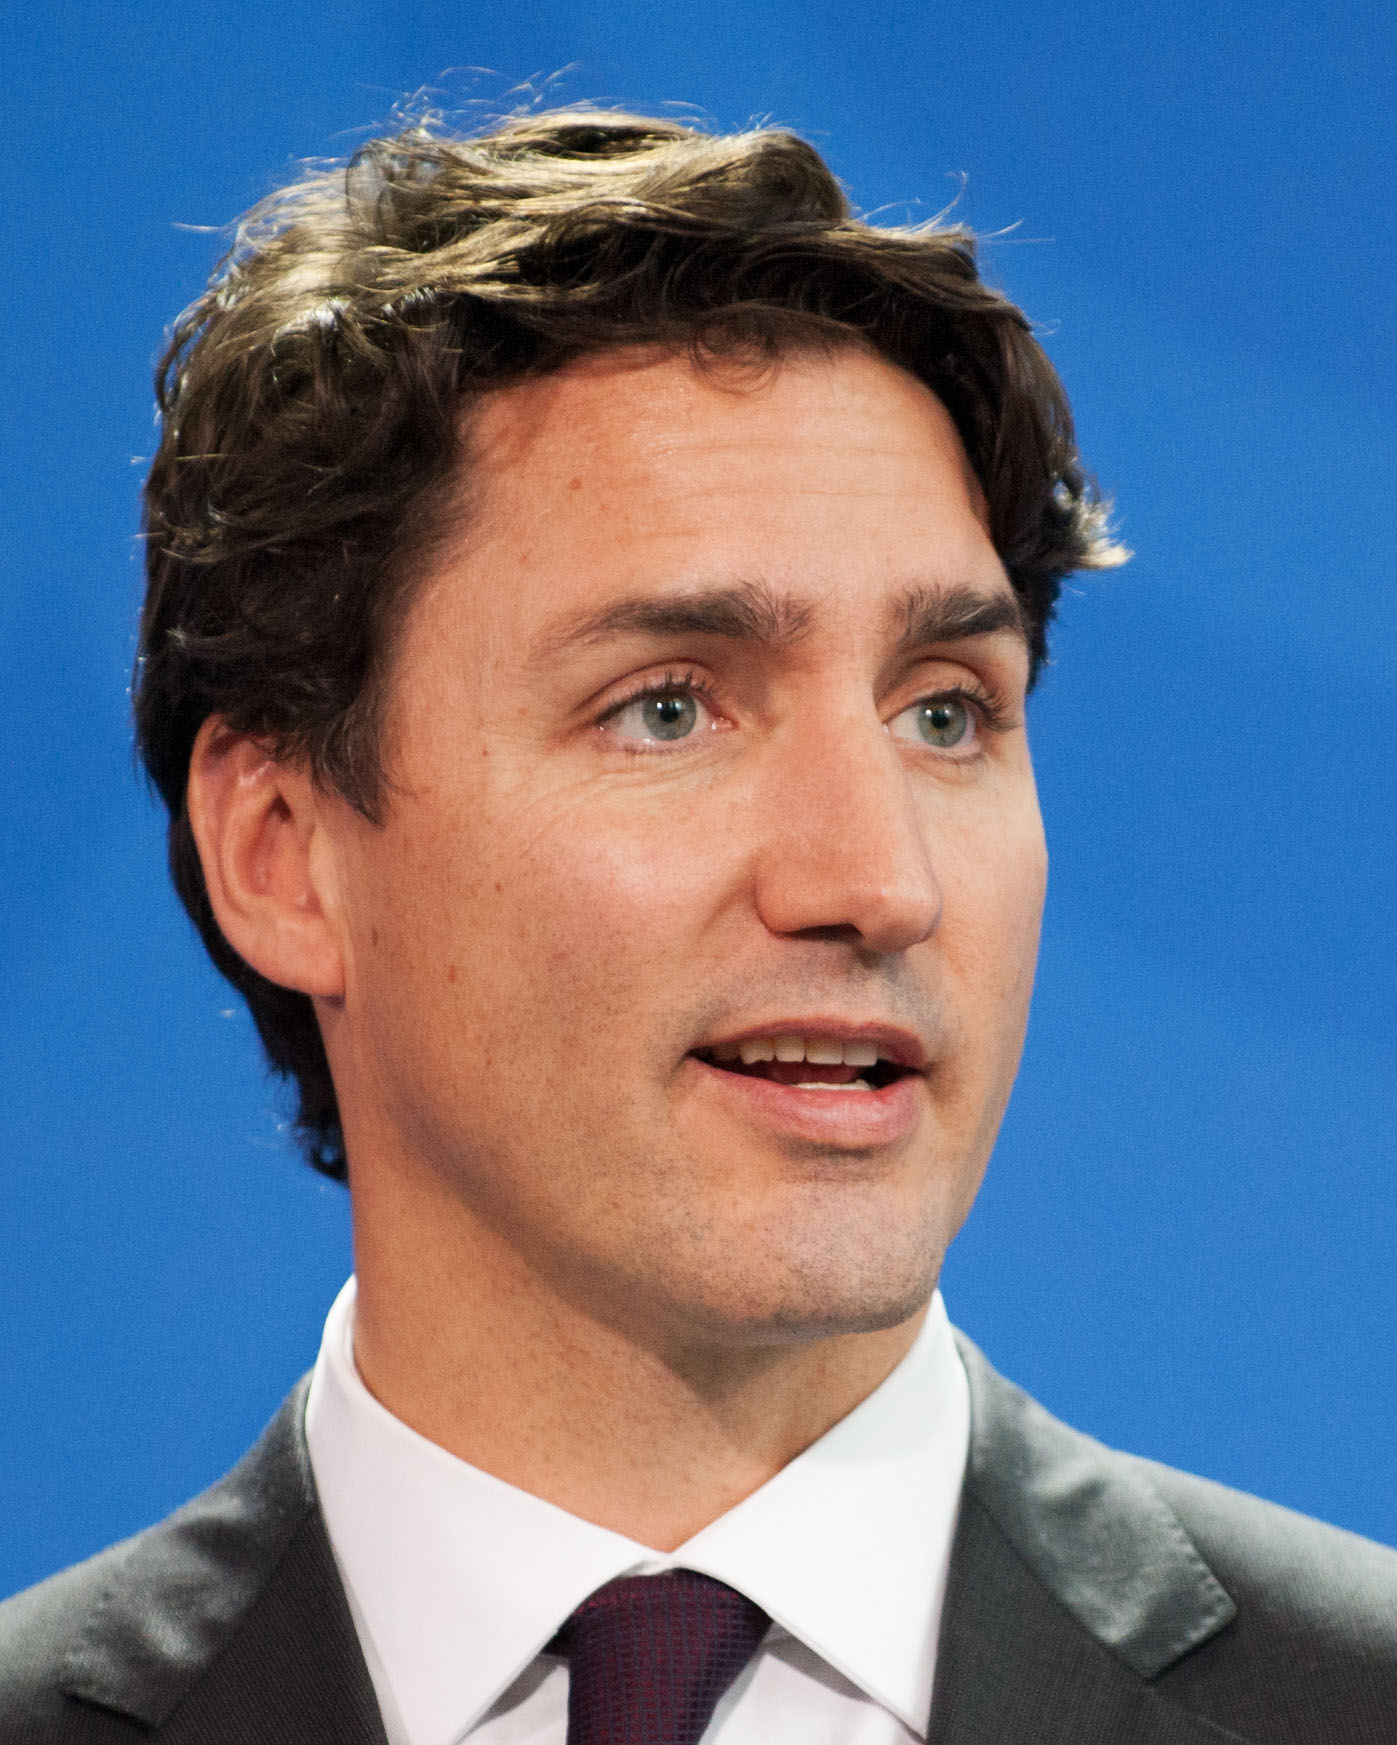 Canadian Premier Justin Trudeau. Source: photocosmos1 / Shutterstock.com